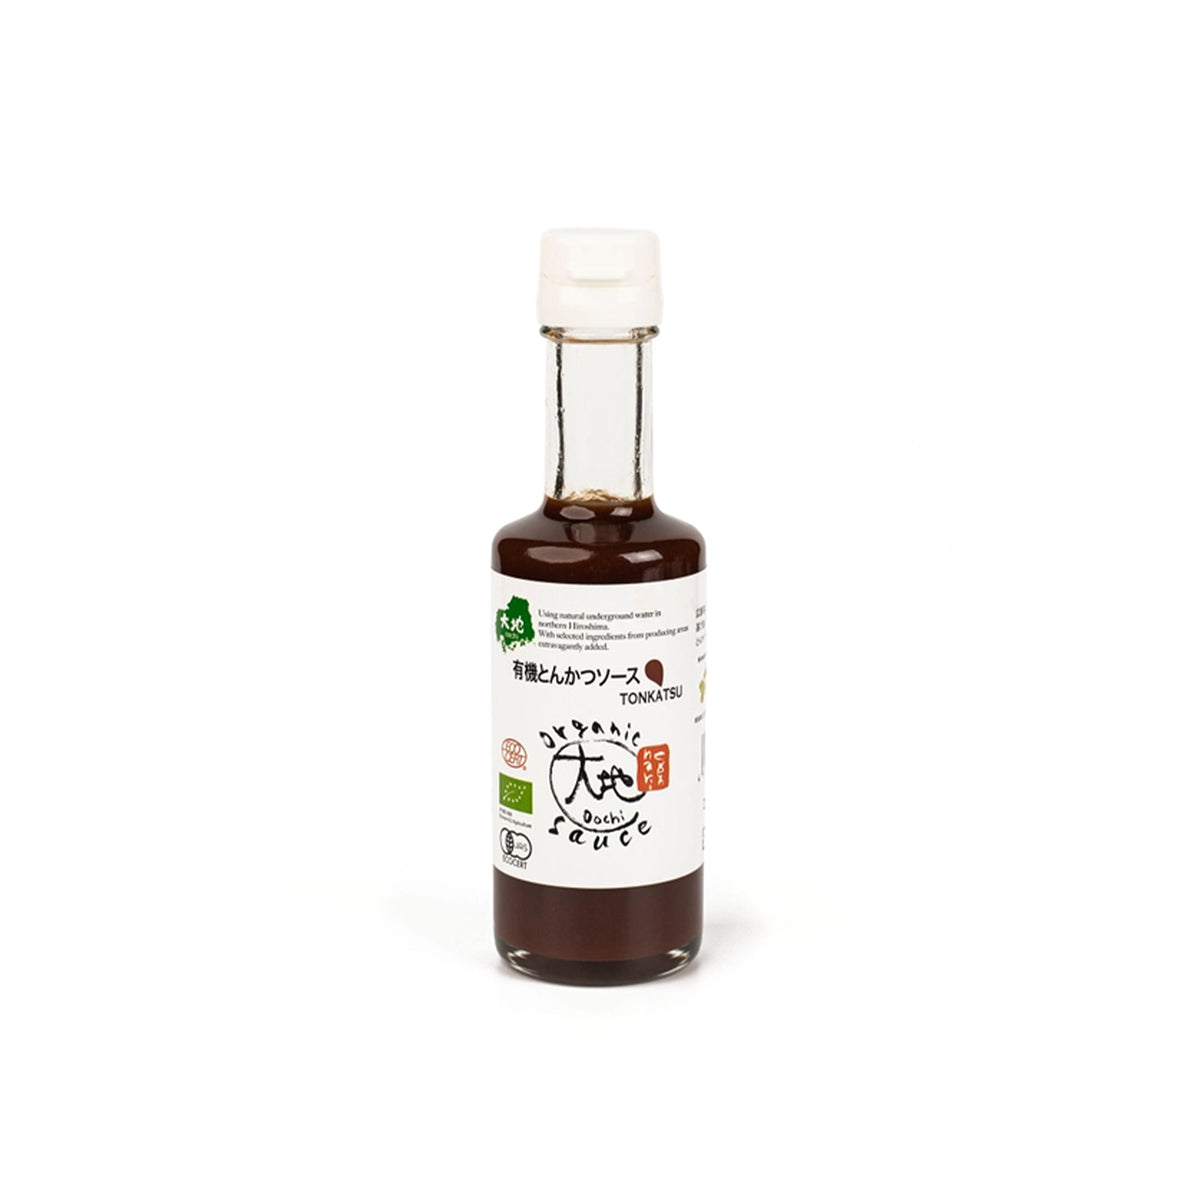 Organic Tonkatsu Sauce, 5.83 fl.oz.